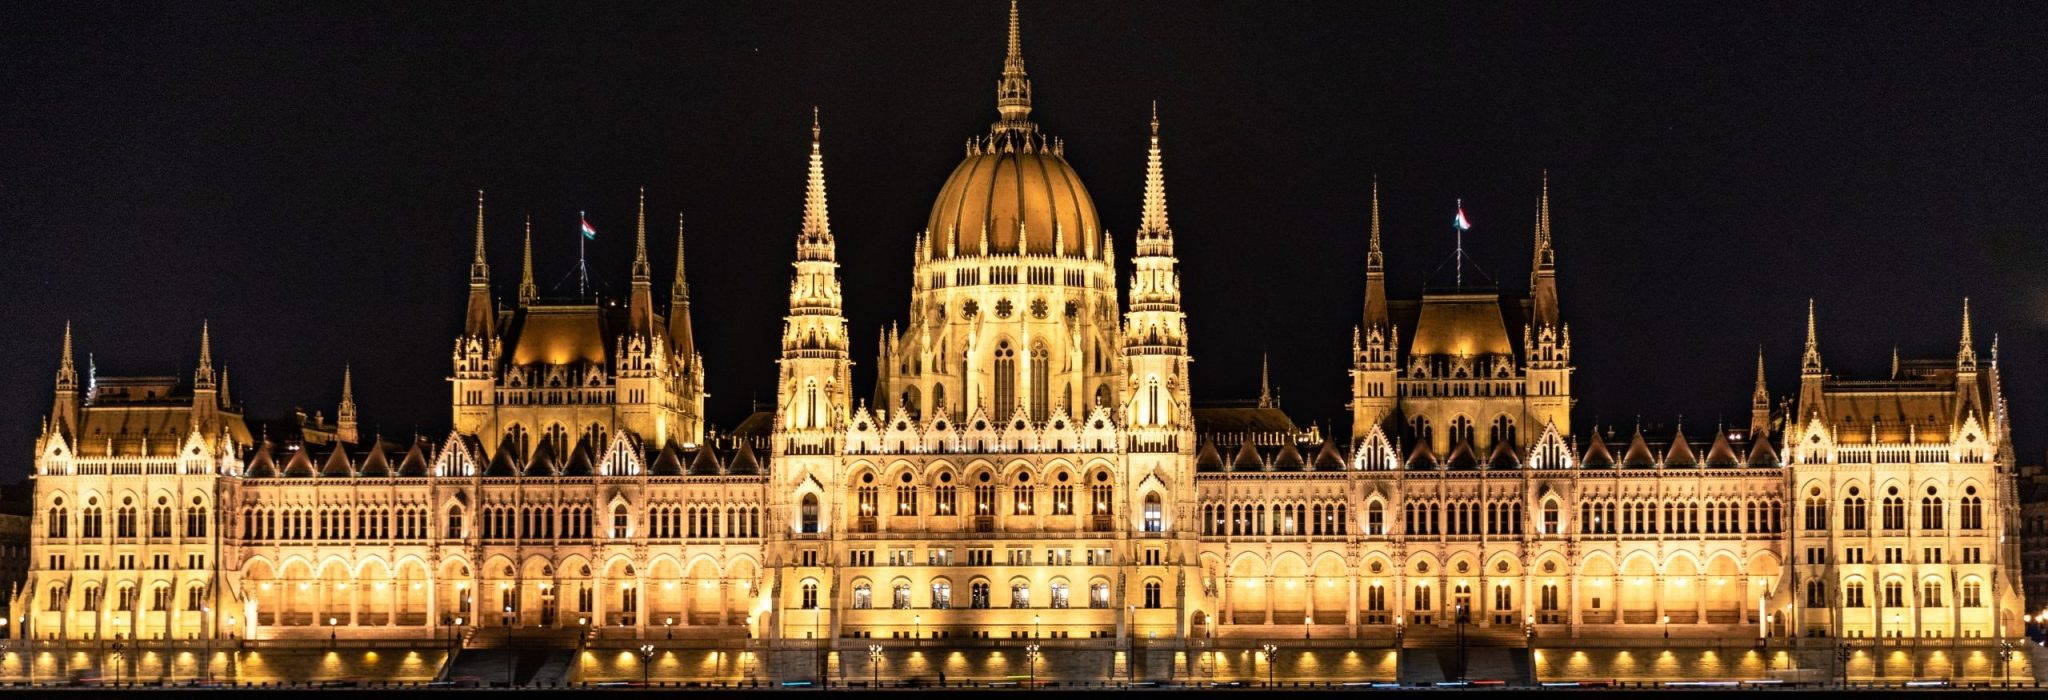 Hungary Parliament at Night